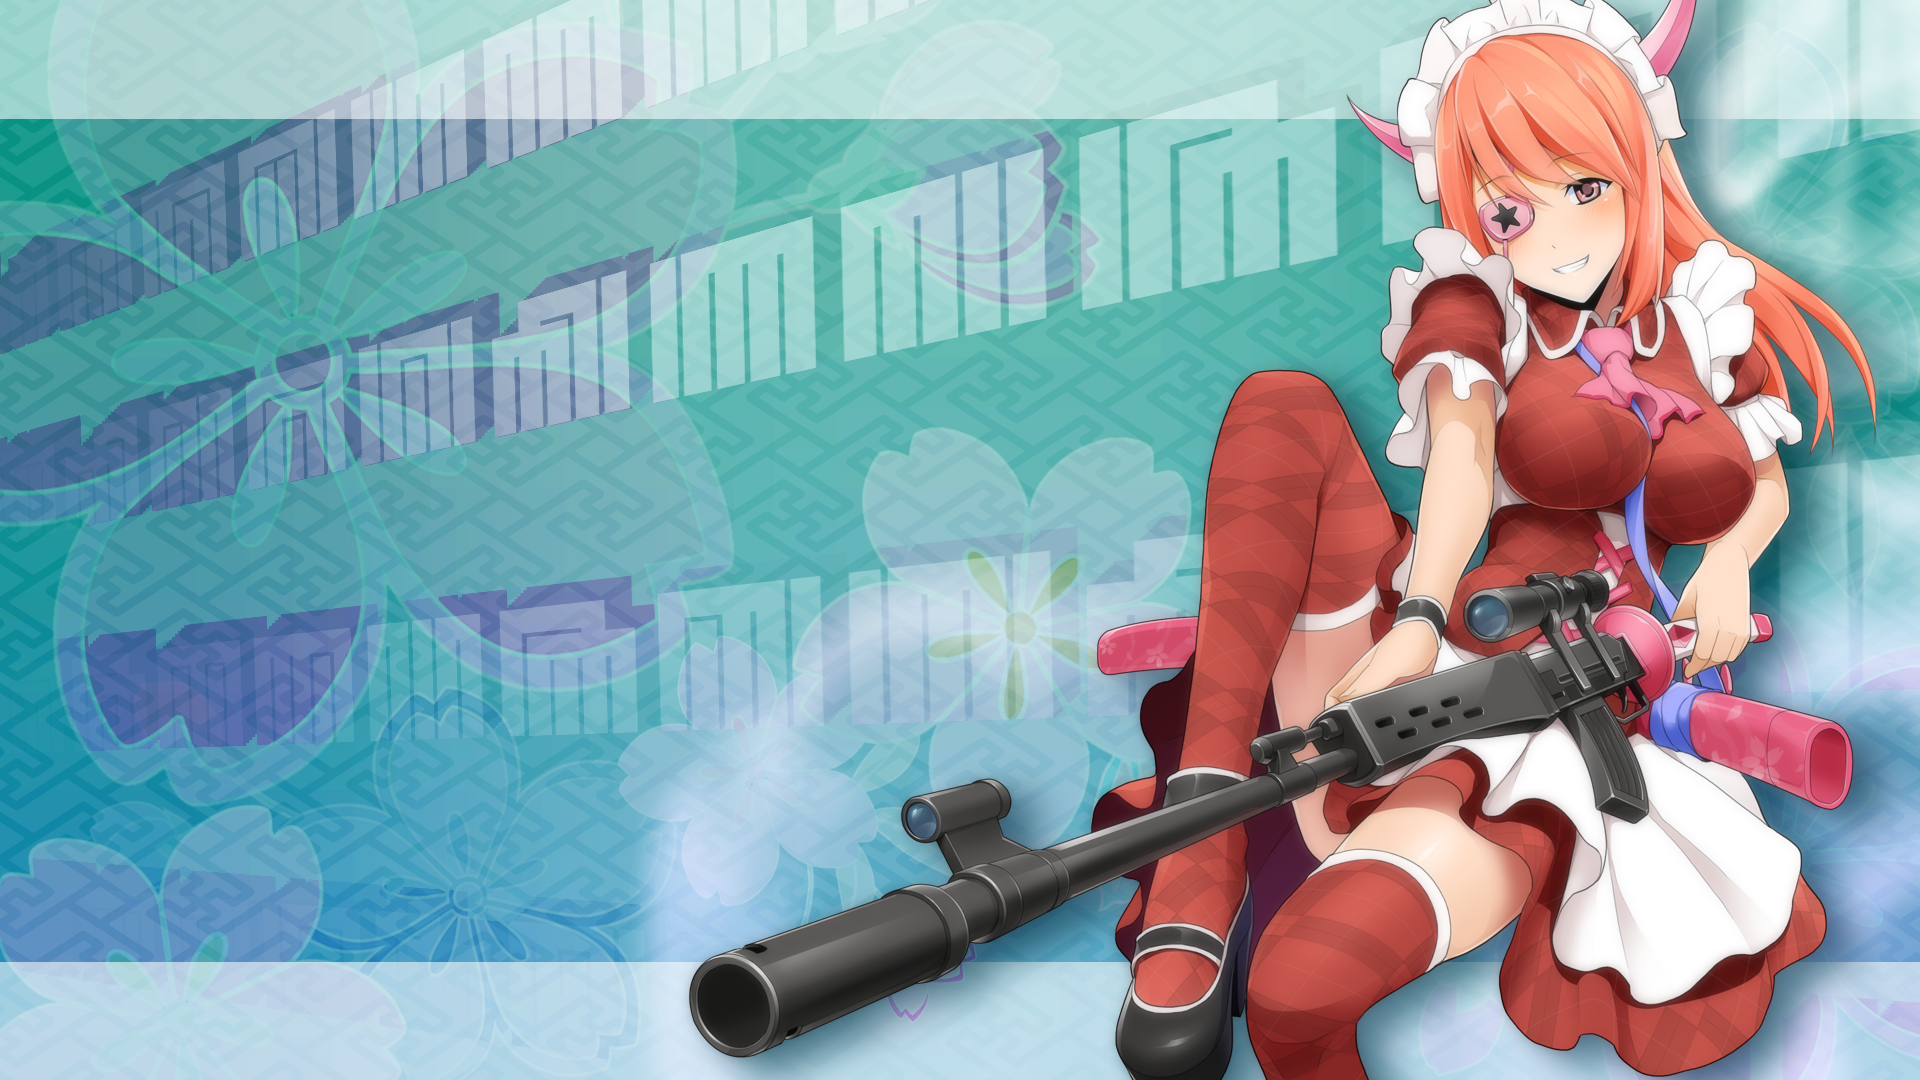 Anime 1920x1080 Onigirl anime big boobs horns anime girls weapon sniper rifle rifles cyan girls with guns stockings red stockings boobs smiling dress red dress